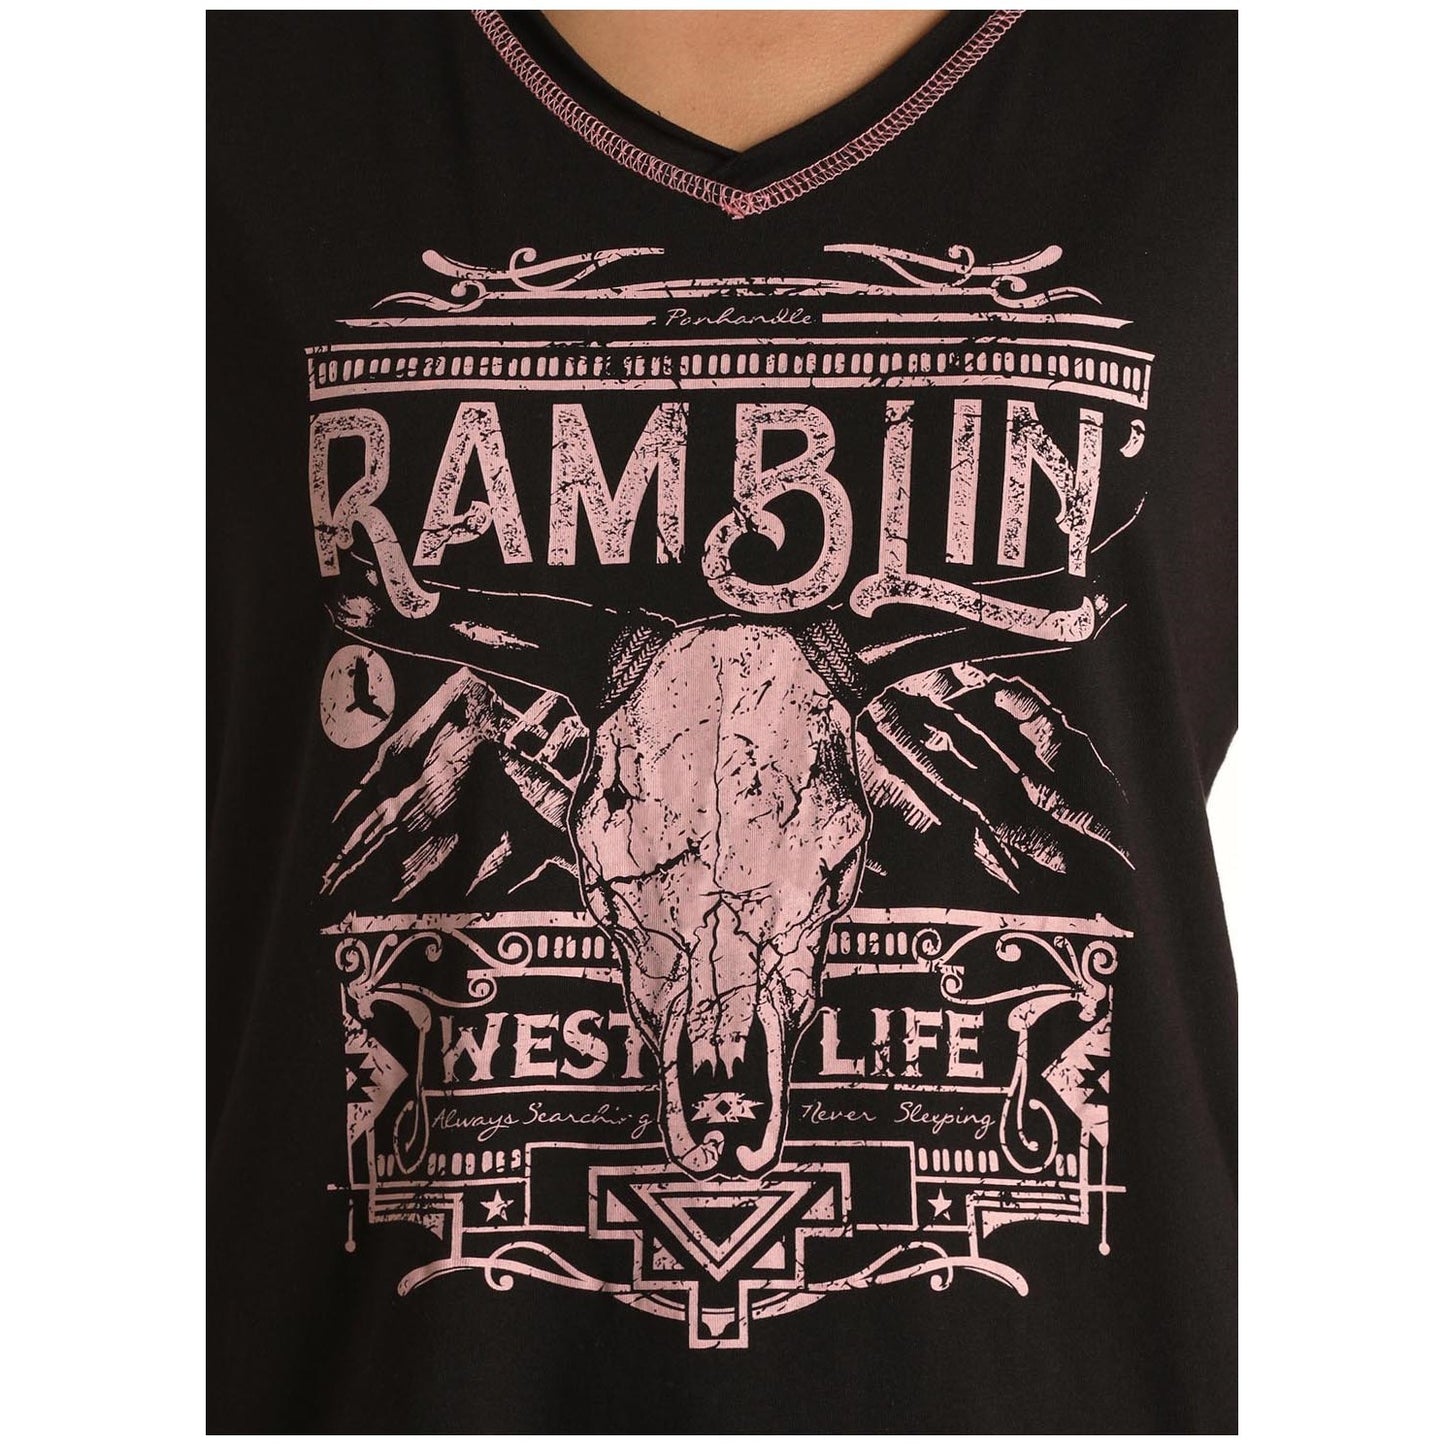 Panhandle White Label Ladies Ramblin Western Black T-shirt L9T3423